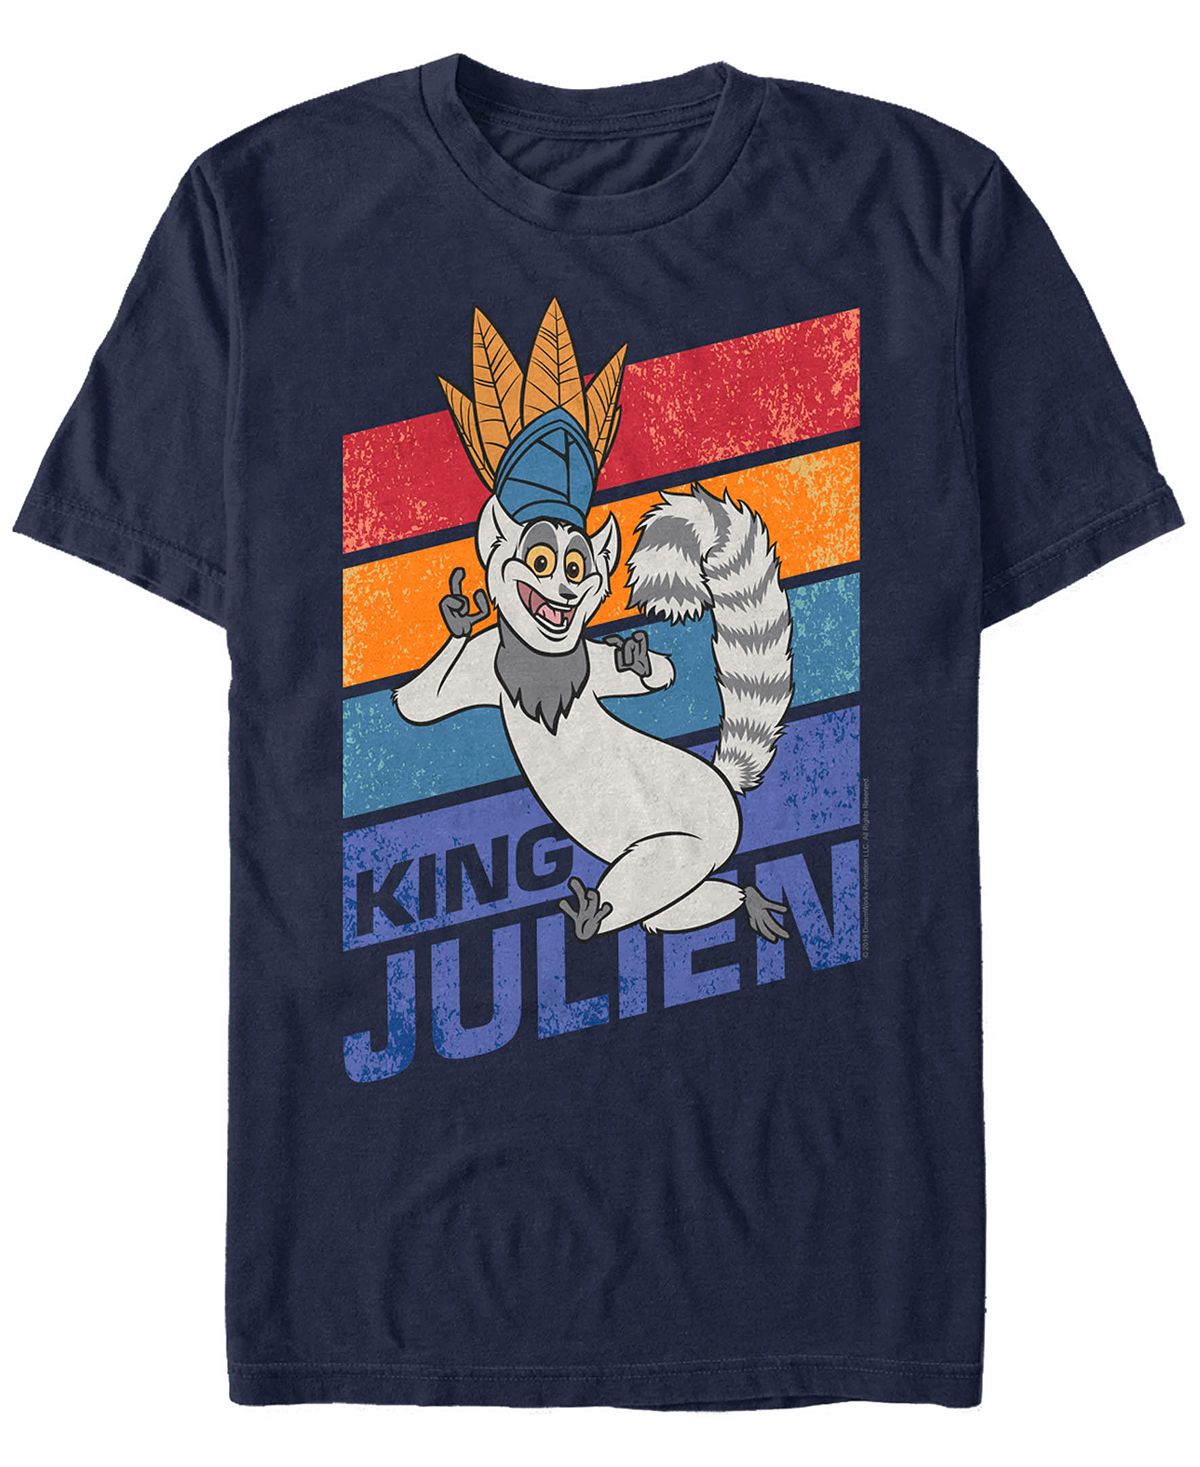 Мужская футболка с коротким рукавом madagascar king julien Fifth Sun, синий